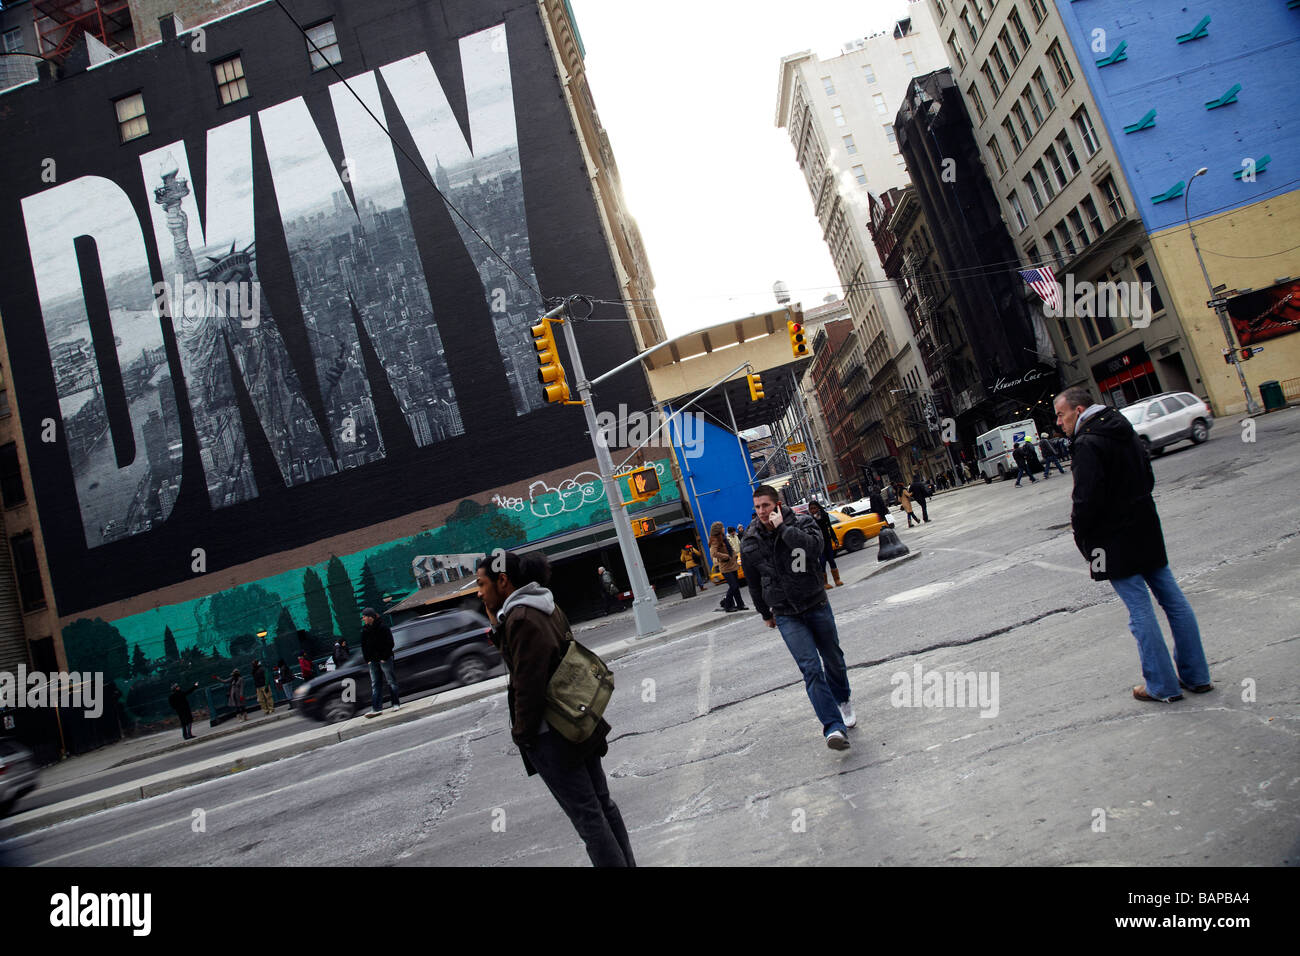 Scena di strada, DKNY affissioni, New York Foto Stock